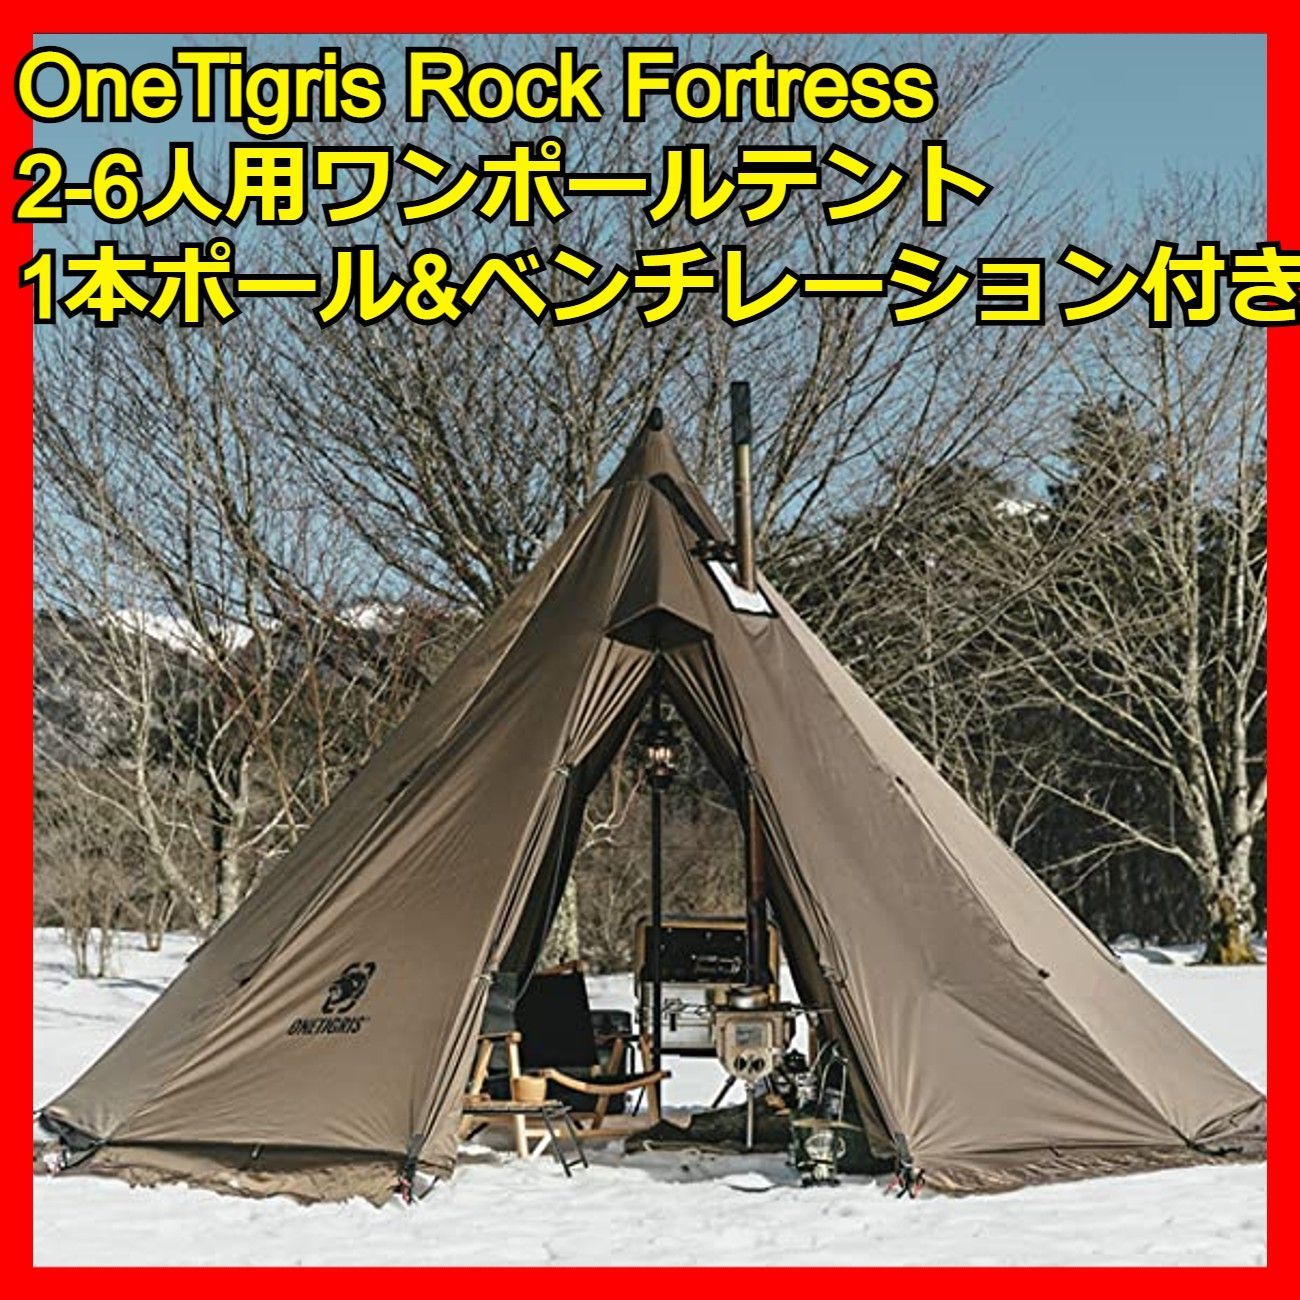 OneTigris Rock Fortressホットテント 4-6人用ワンポール - アウトドア